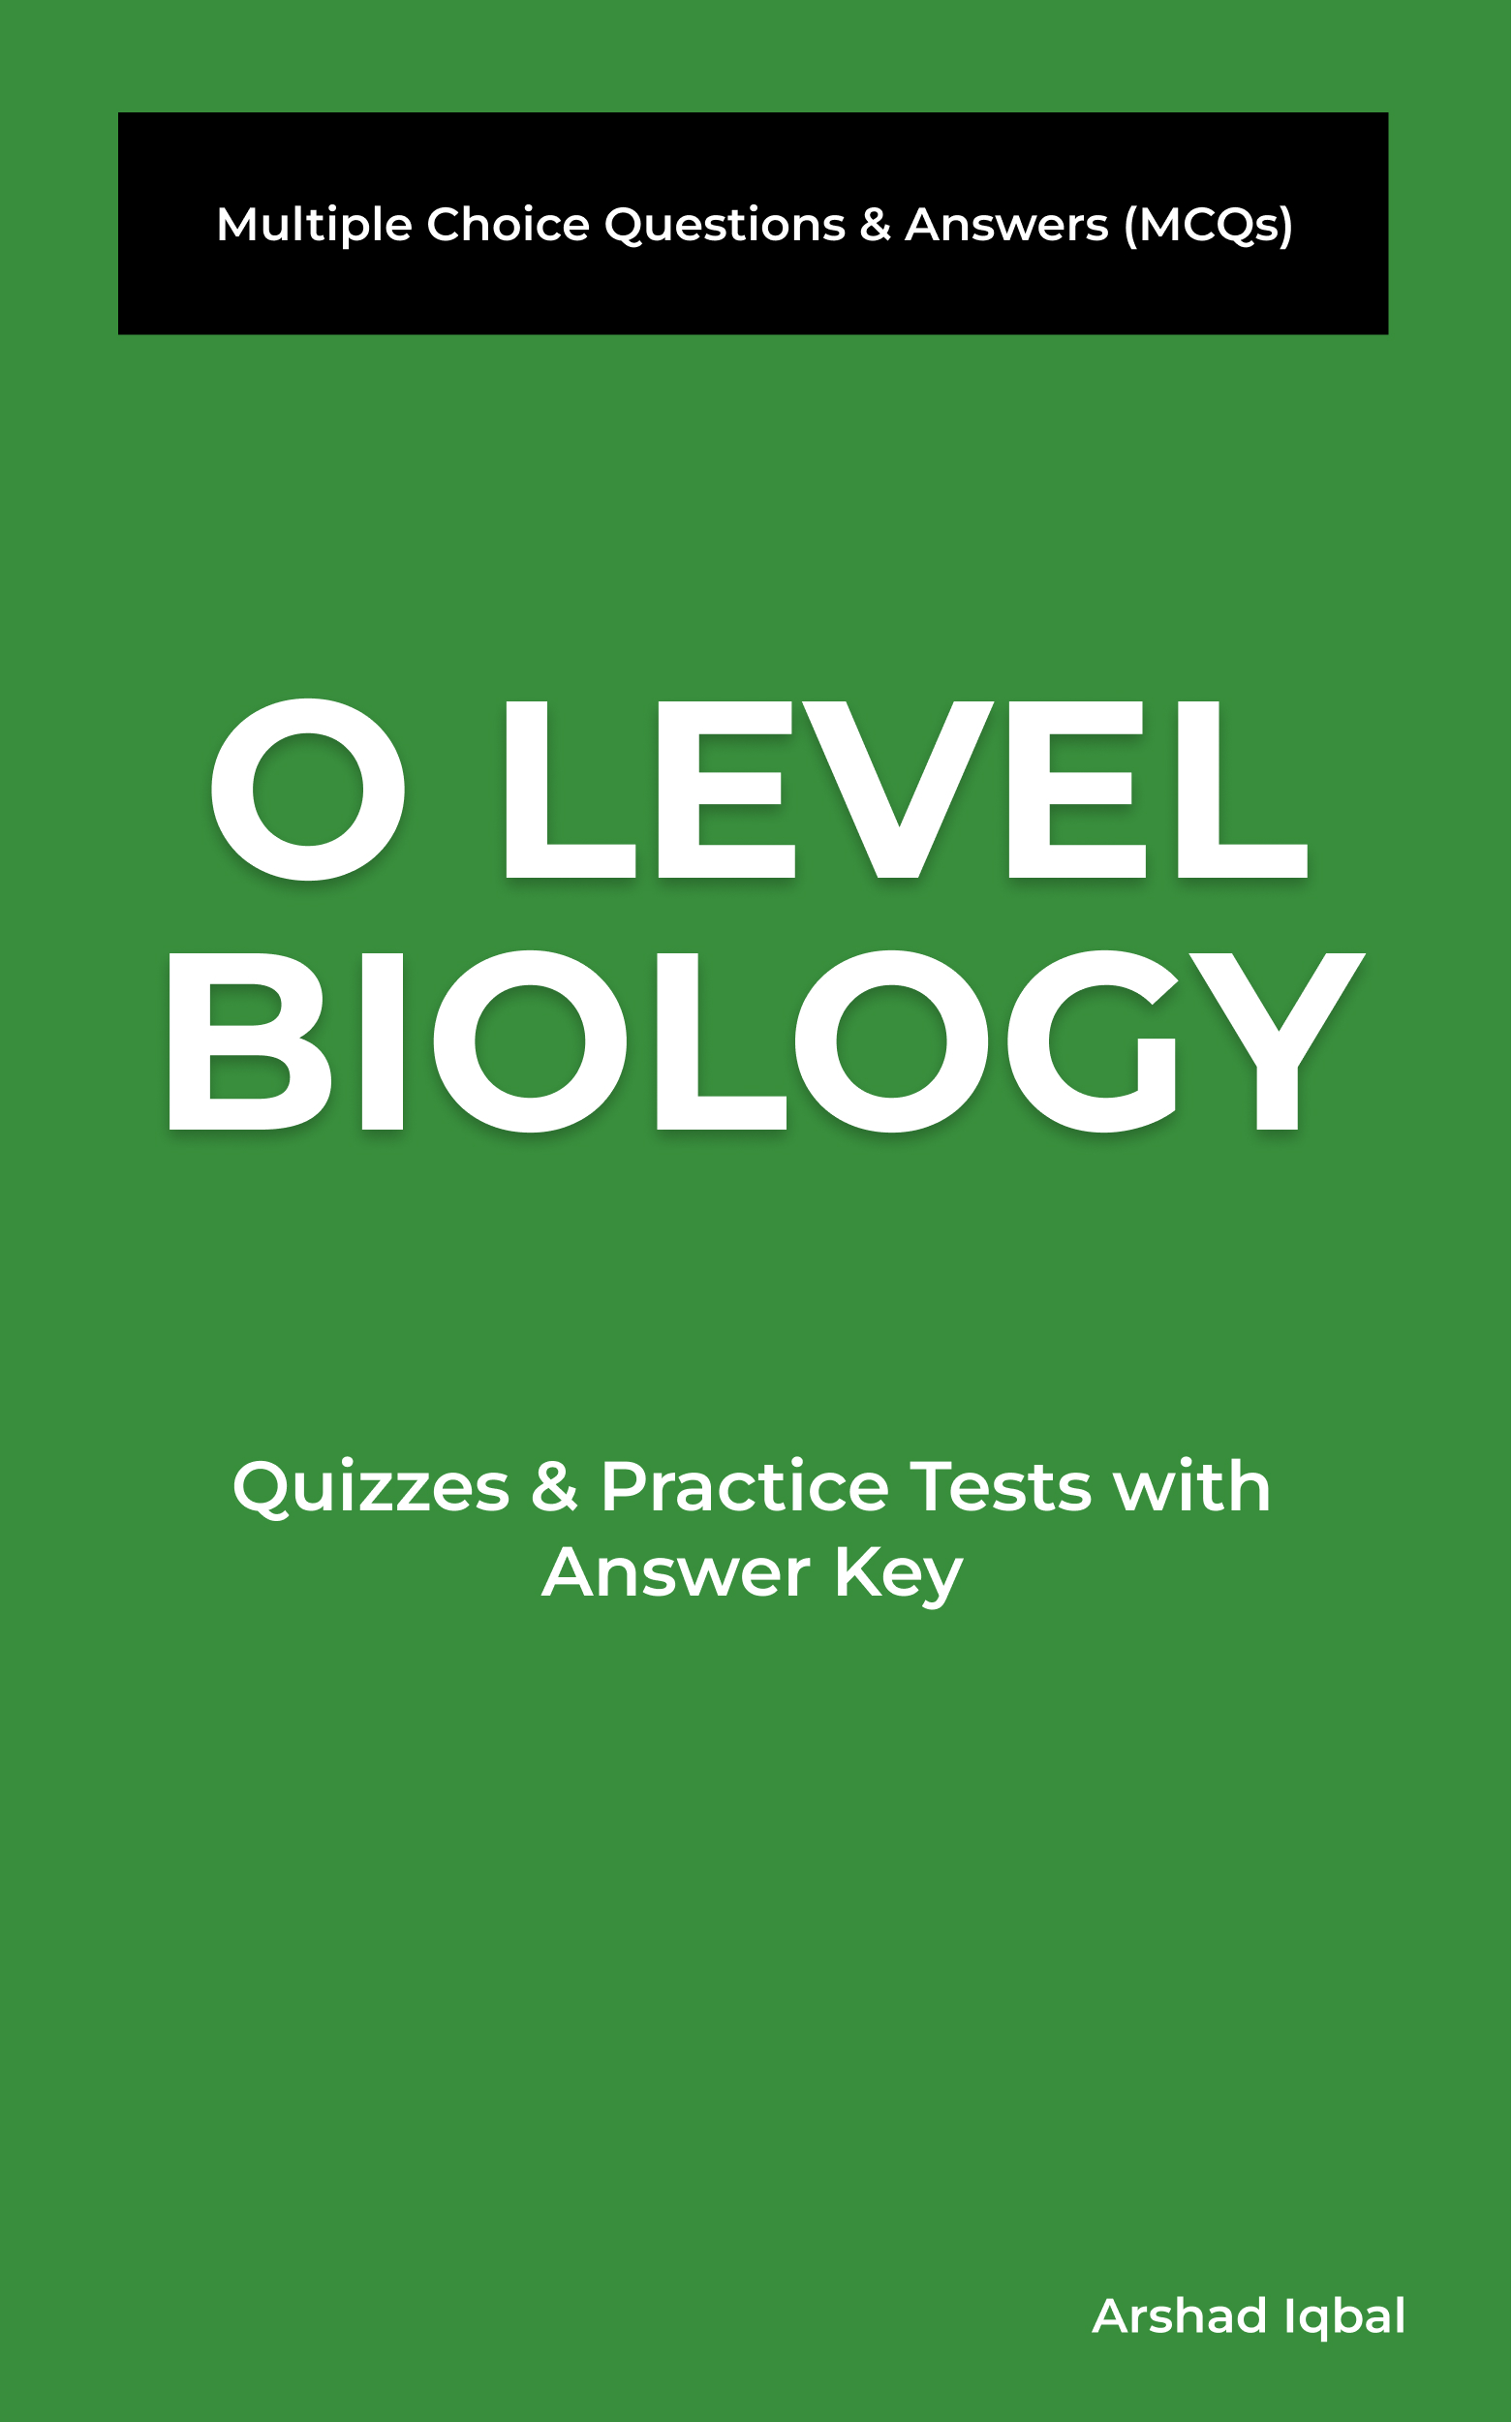 O Level Biology MCQ Book PDF